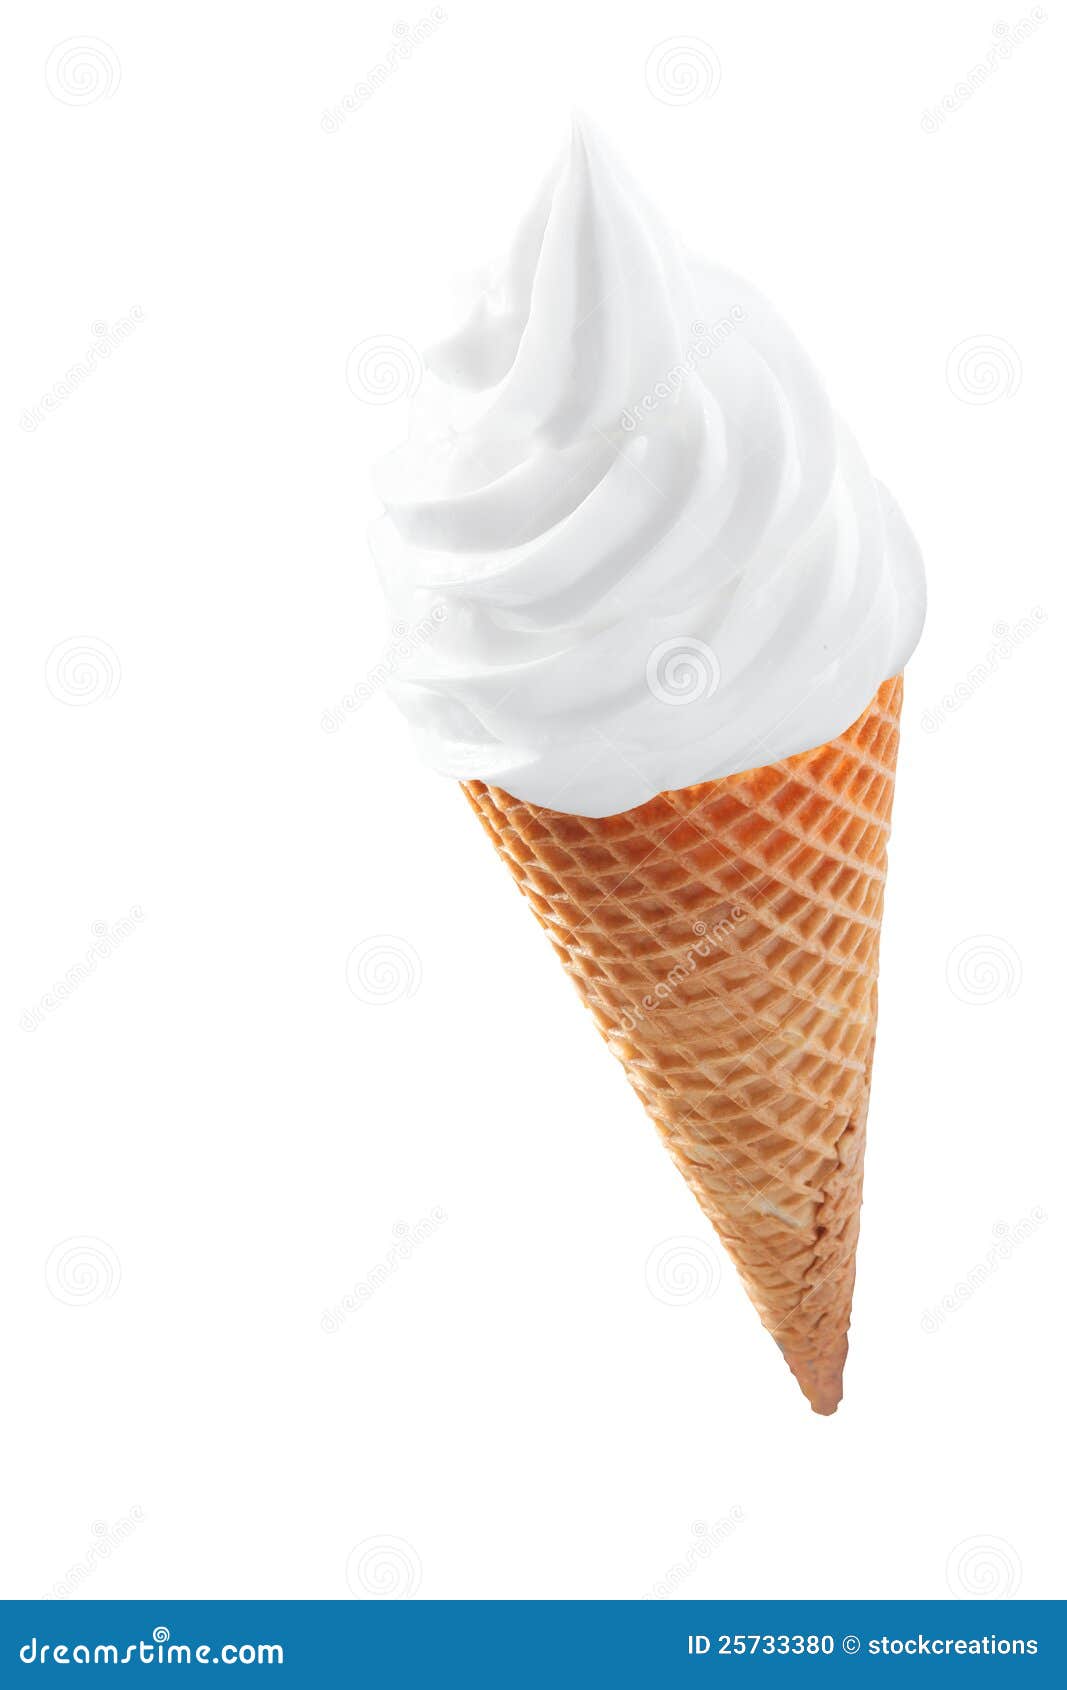 icecream cone with twirled softserve